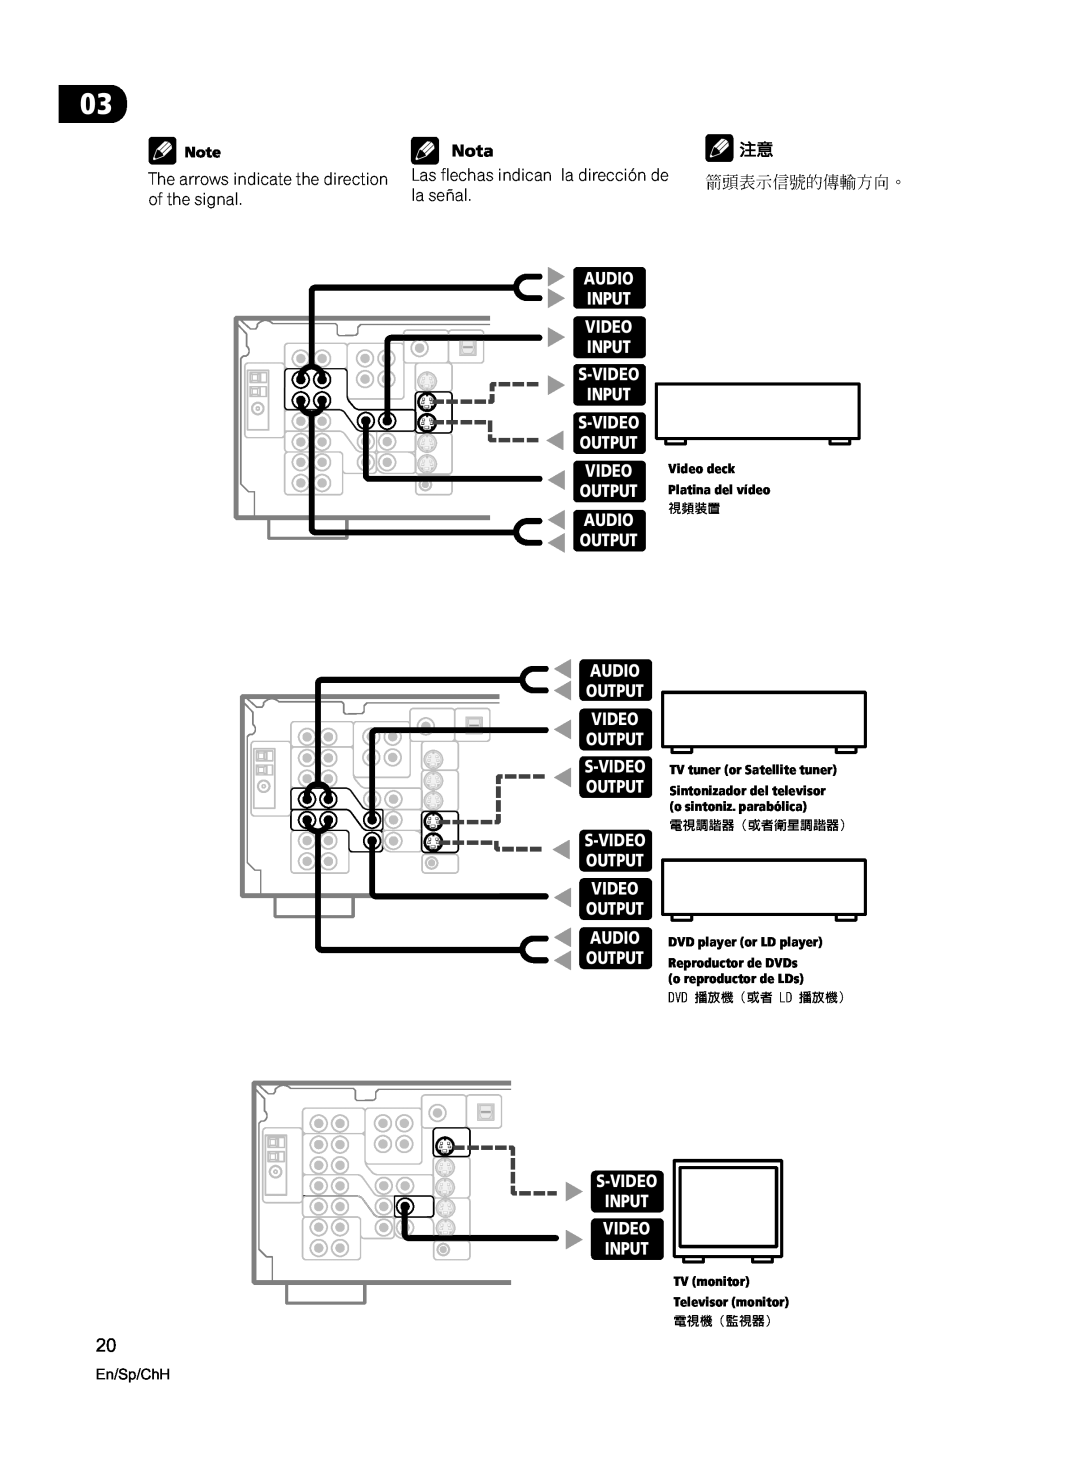 Pioneer VSX-D512-K, VSX-D512-S Audio Input Video Input S-Video Input, Audio Output, S-Video Input Video Input, Video deck 